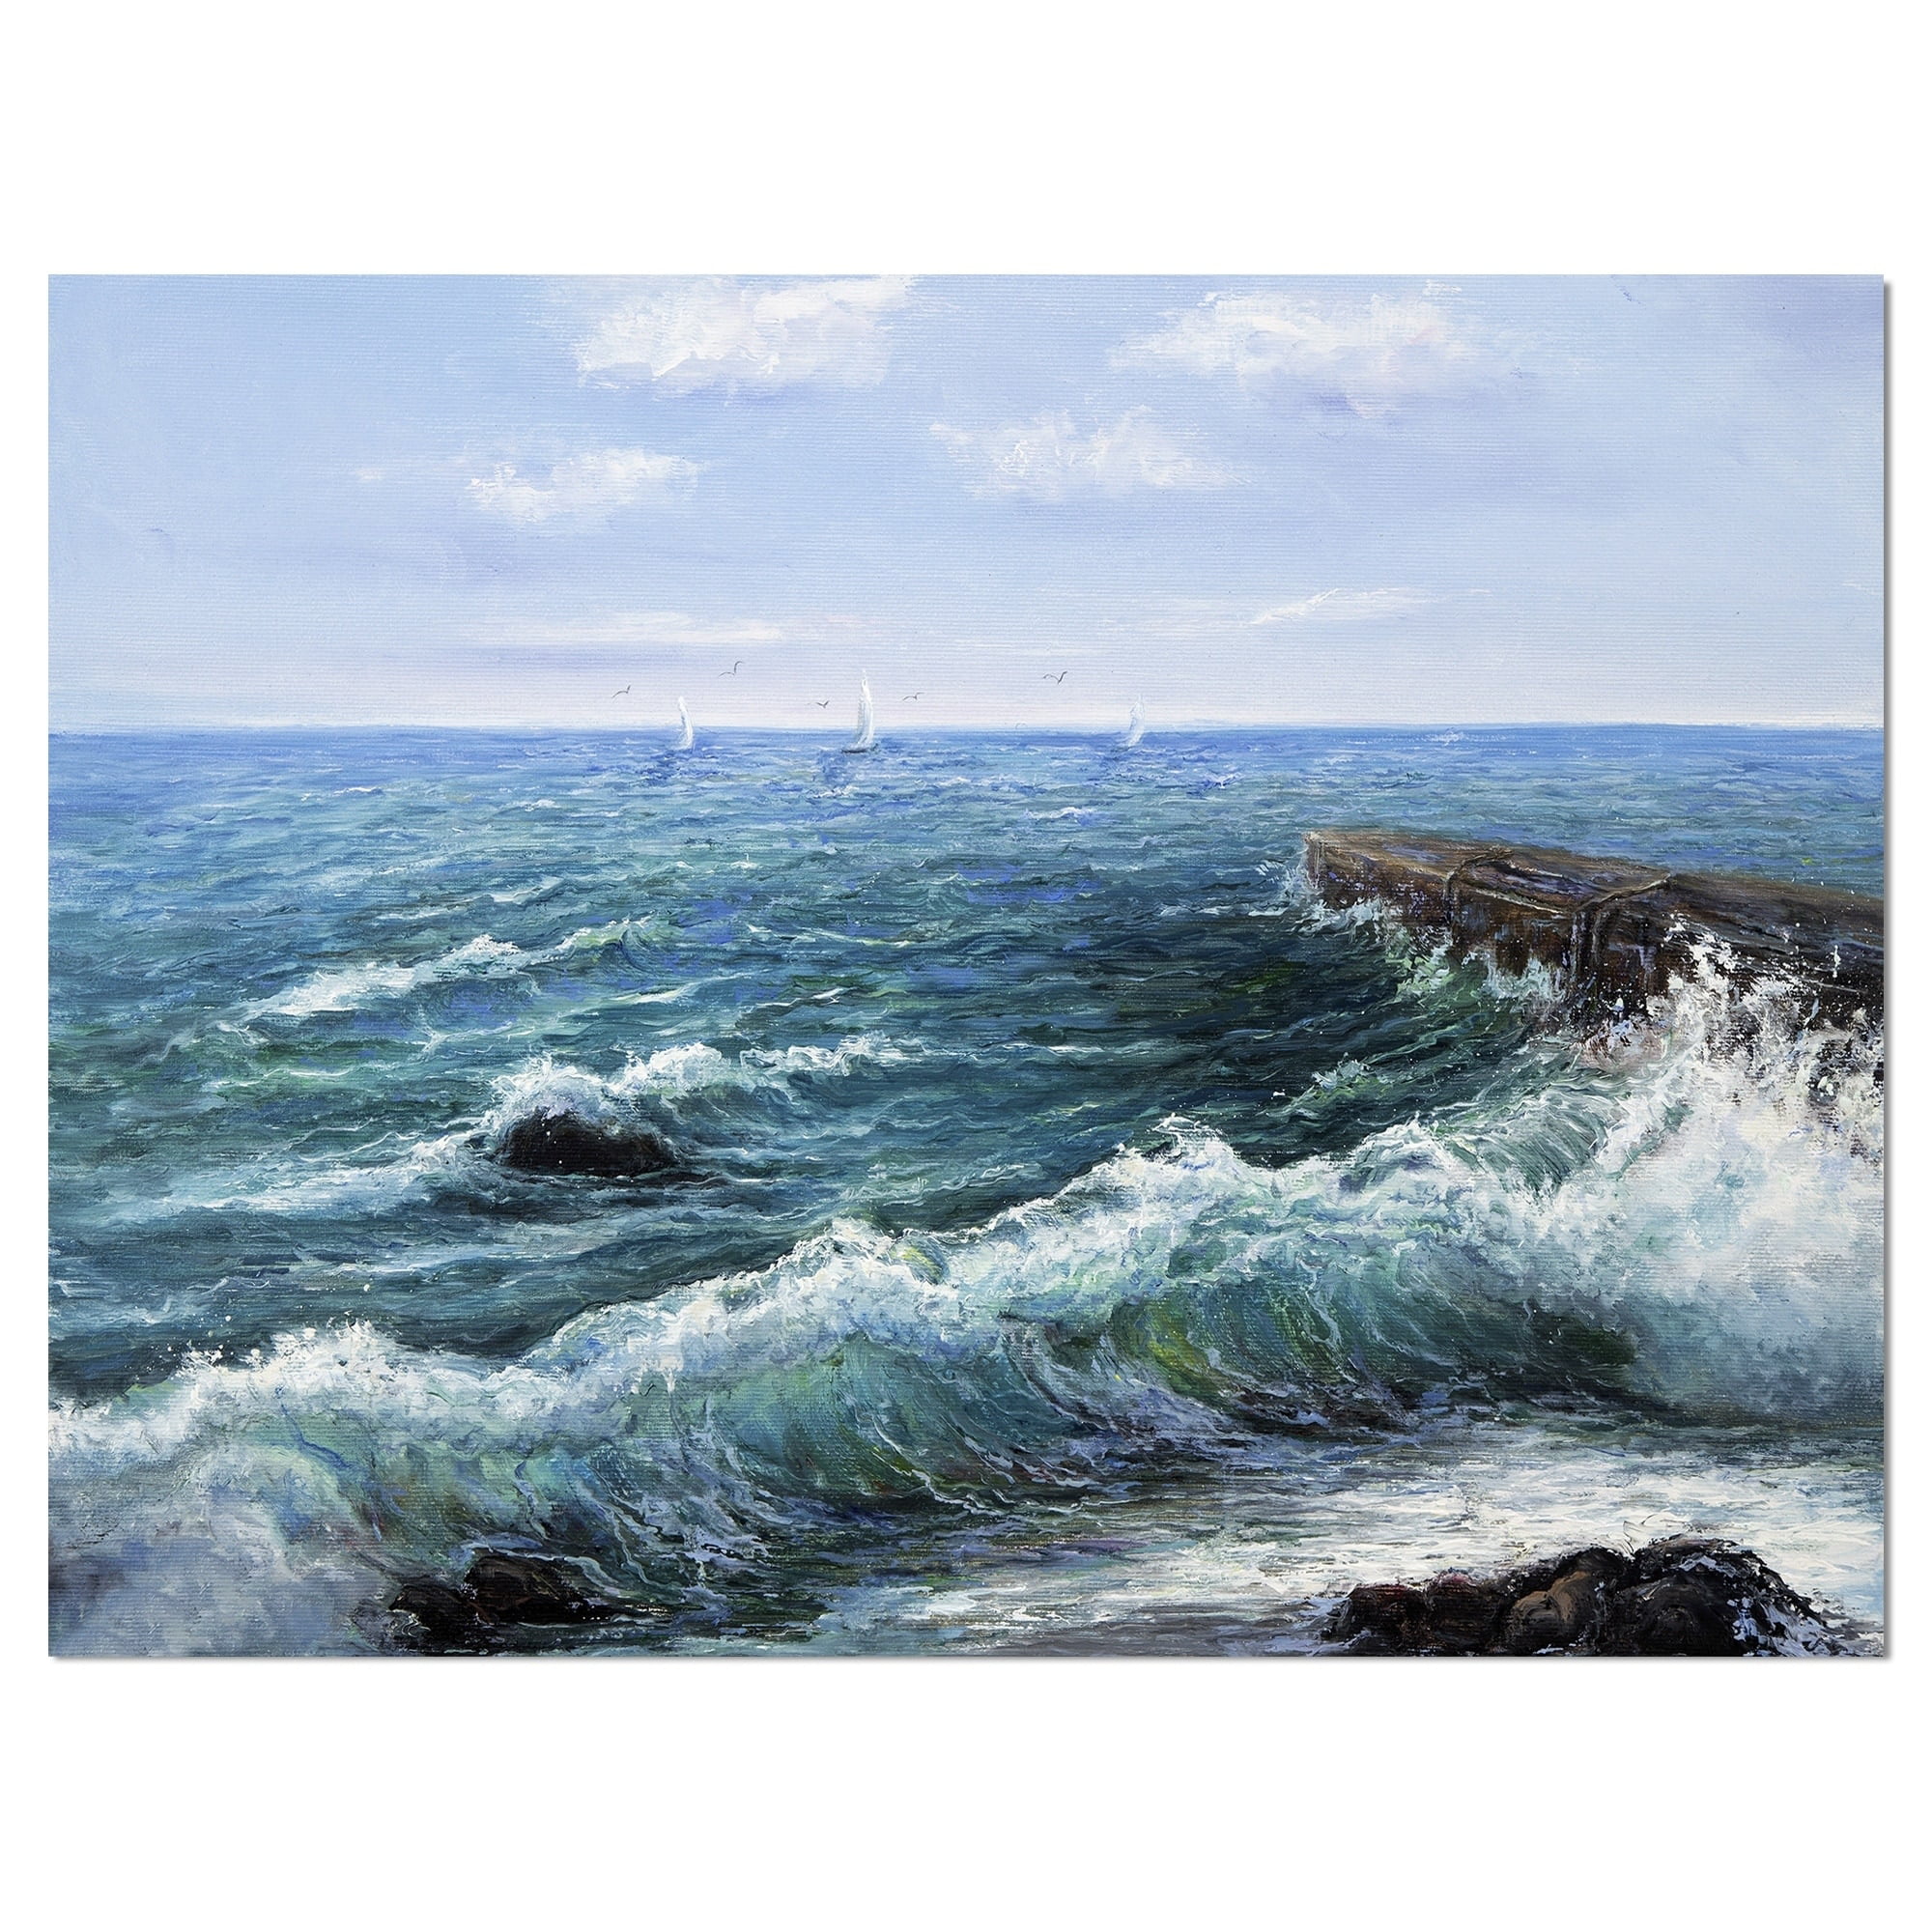 Crashing Wave Ocean Beach Scenery Nature Wall Decor Mahogany Framed Art Picture 